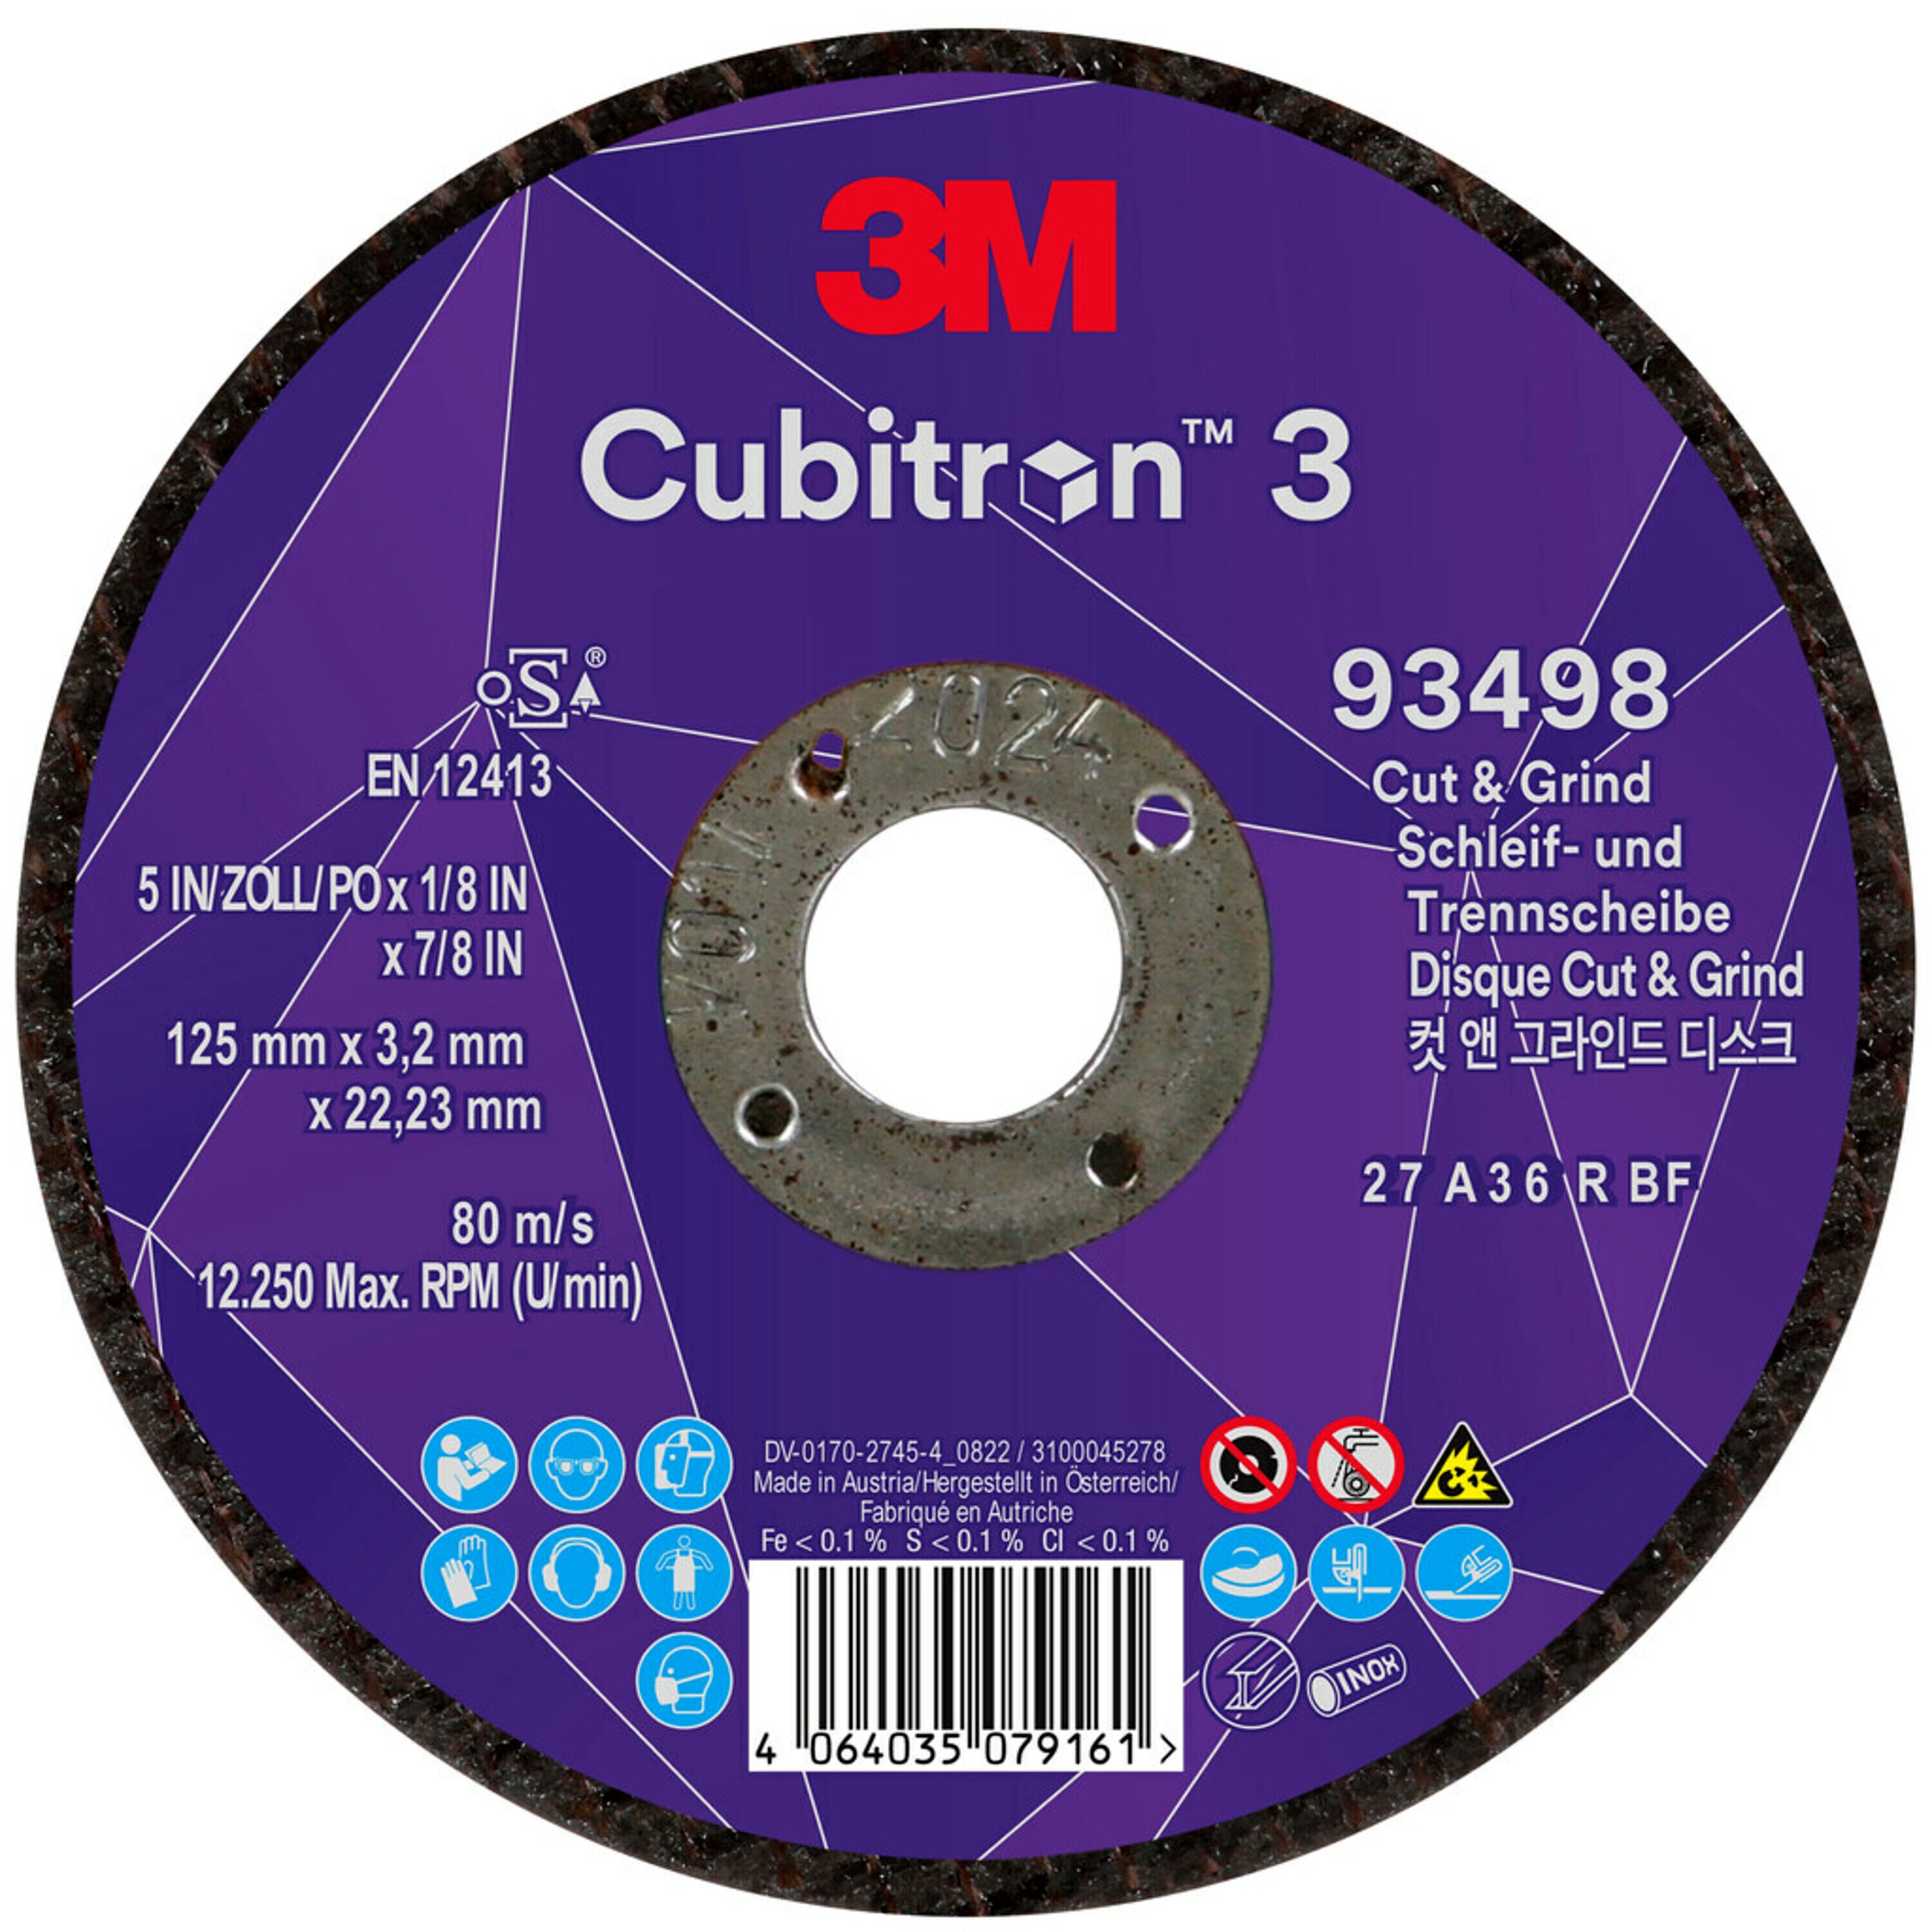 3M Cubitron 3 Cut & Grind Schruppscheibe, 125 mm, 3,2 mm, 22,23 mm, 36+, Typ 27 #93498